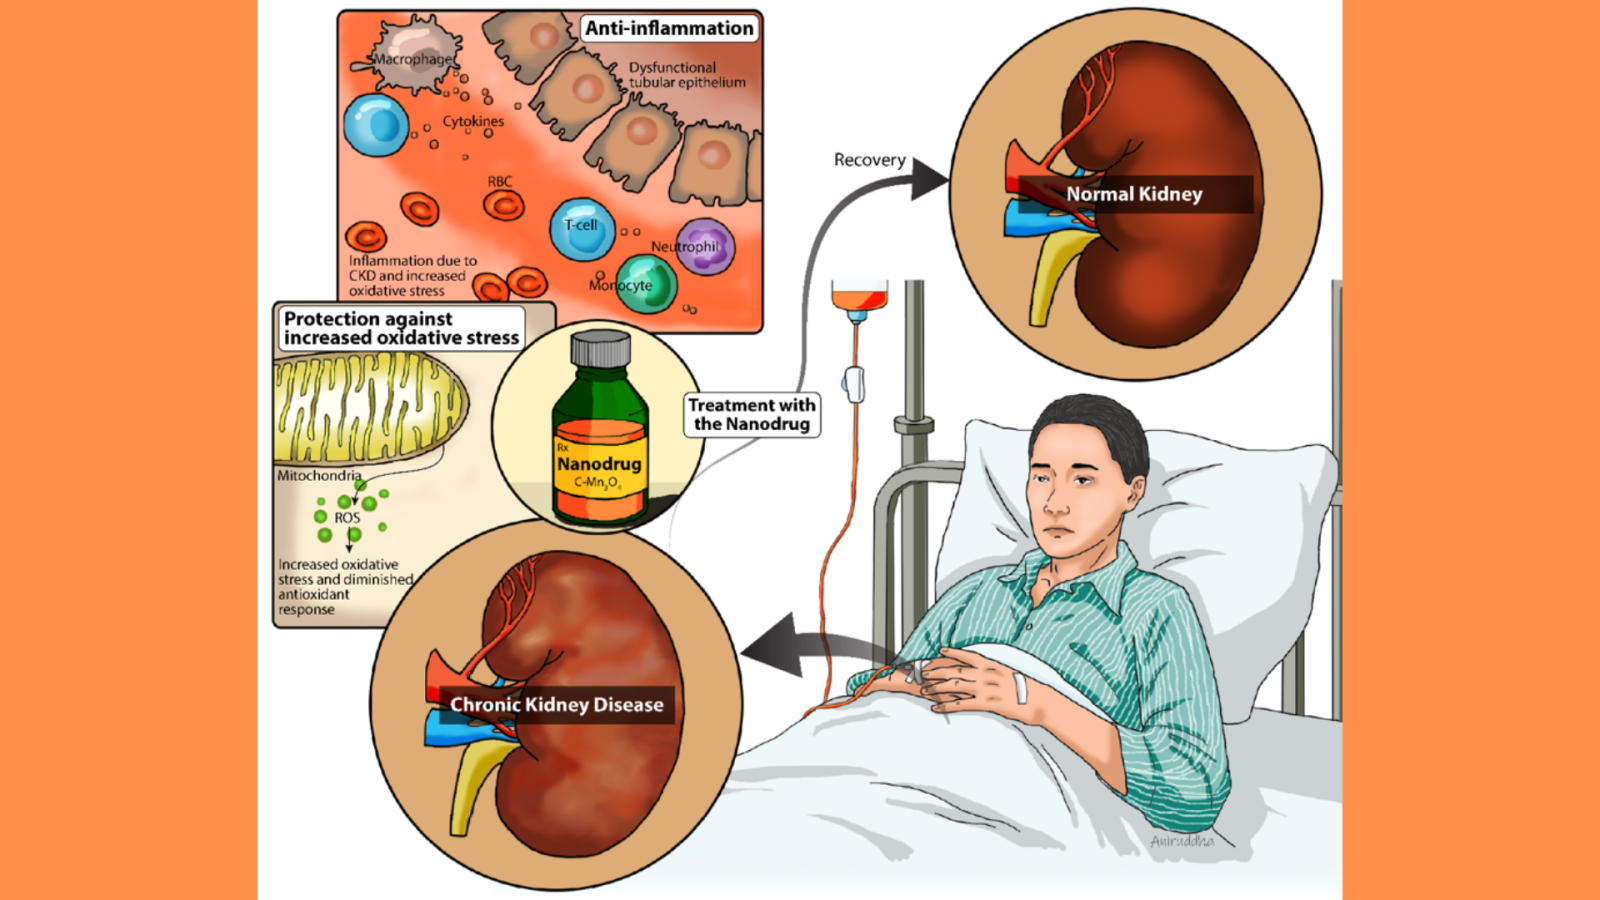 An&#x20;illustration&#x20;explaining&#x20;the&#x20;potential&#x20;of&#x20;nanodrugs&#x20;in&#x20;the&#x20;treatment&#x20;of&#x20;chronic&#x20;kidney&#x20;disease.